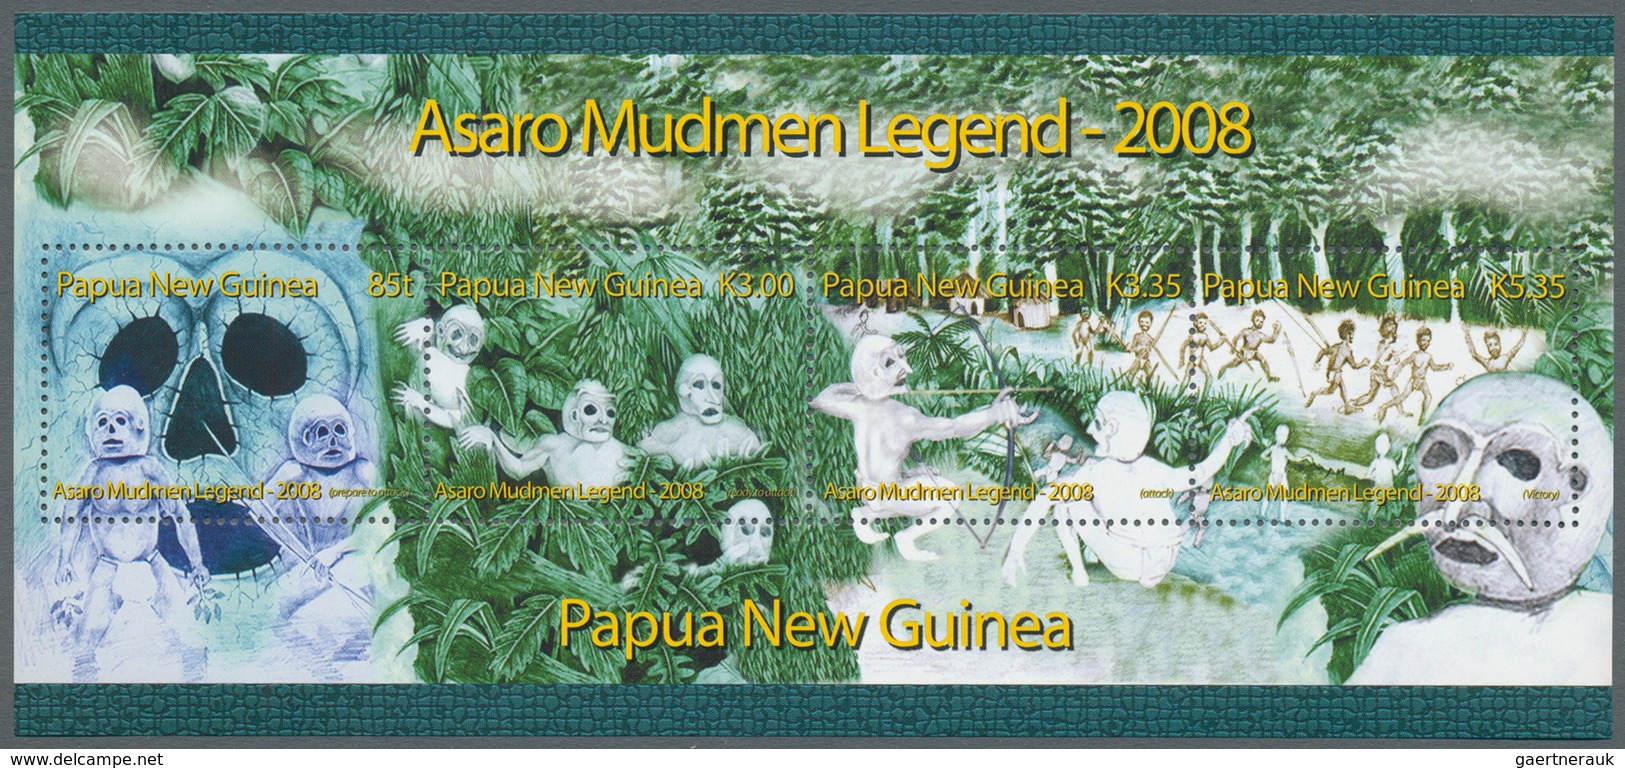 Papua Neuguinea: 2008. Lot With 500 Souvenir Sheets Each Containing A Complete Set ASARO MUDMEN LEGE - Papua New Guinea